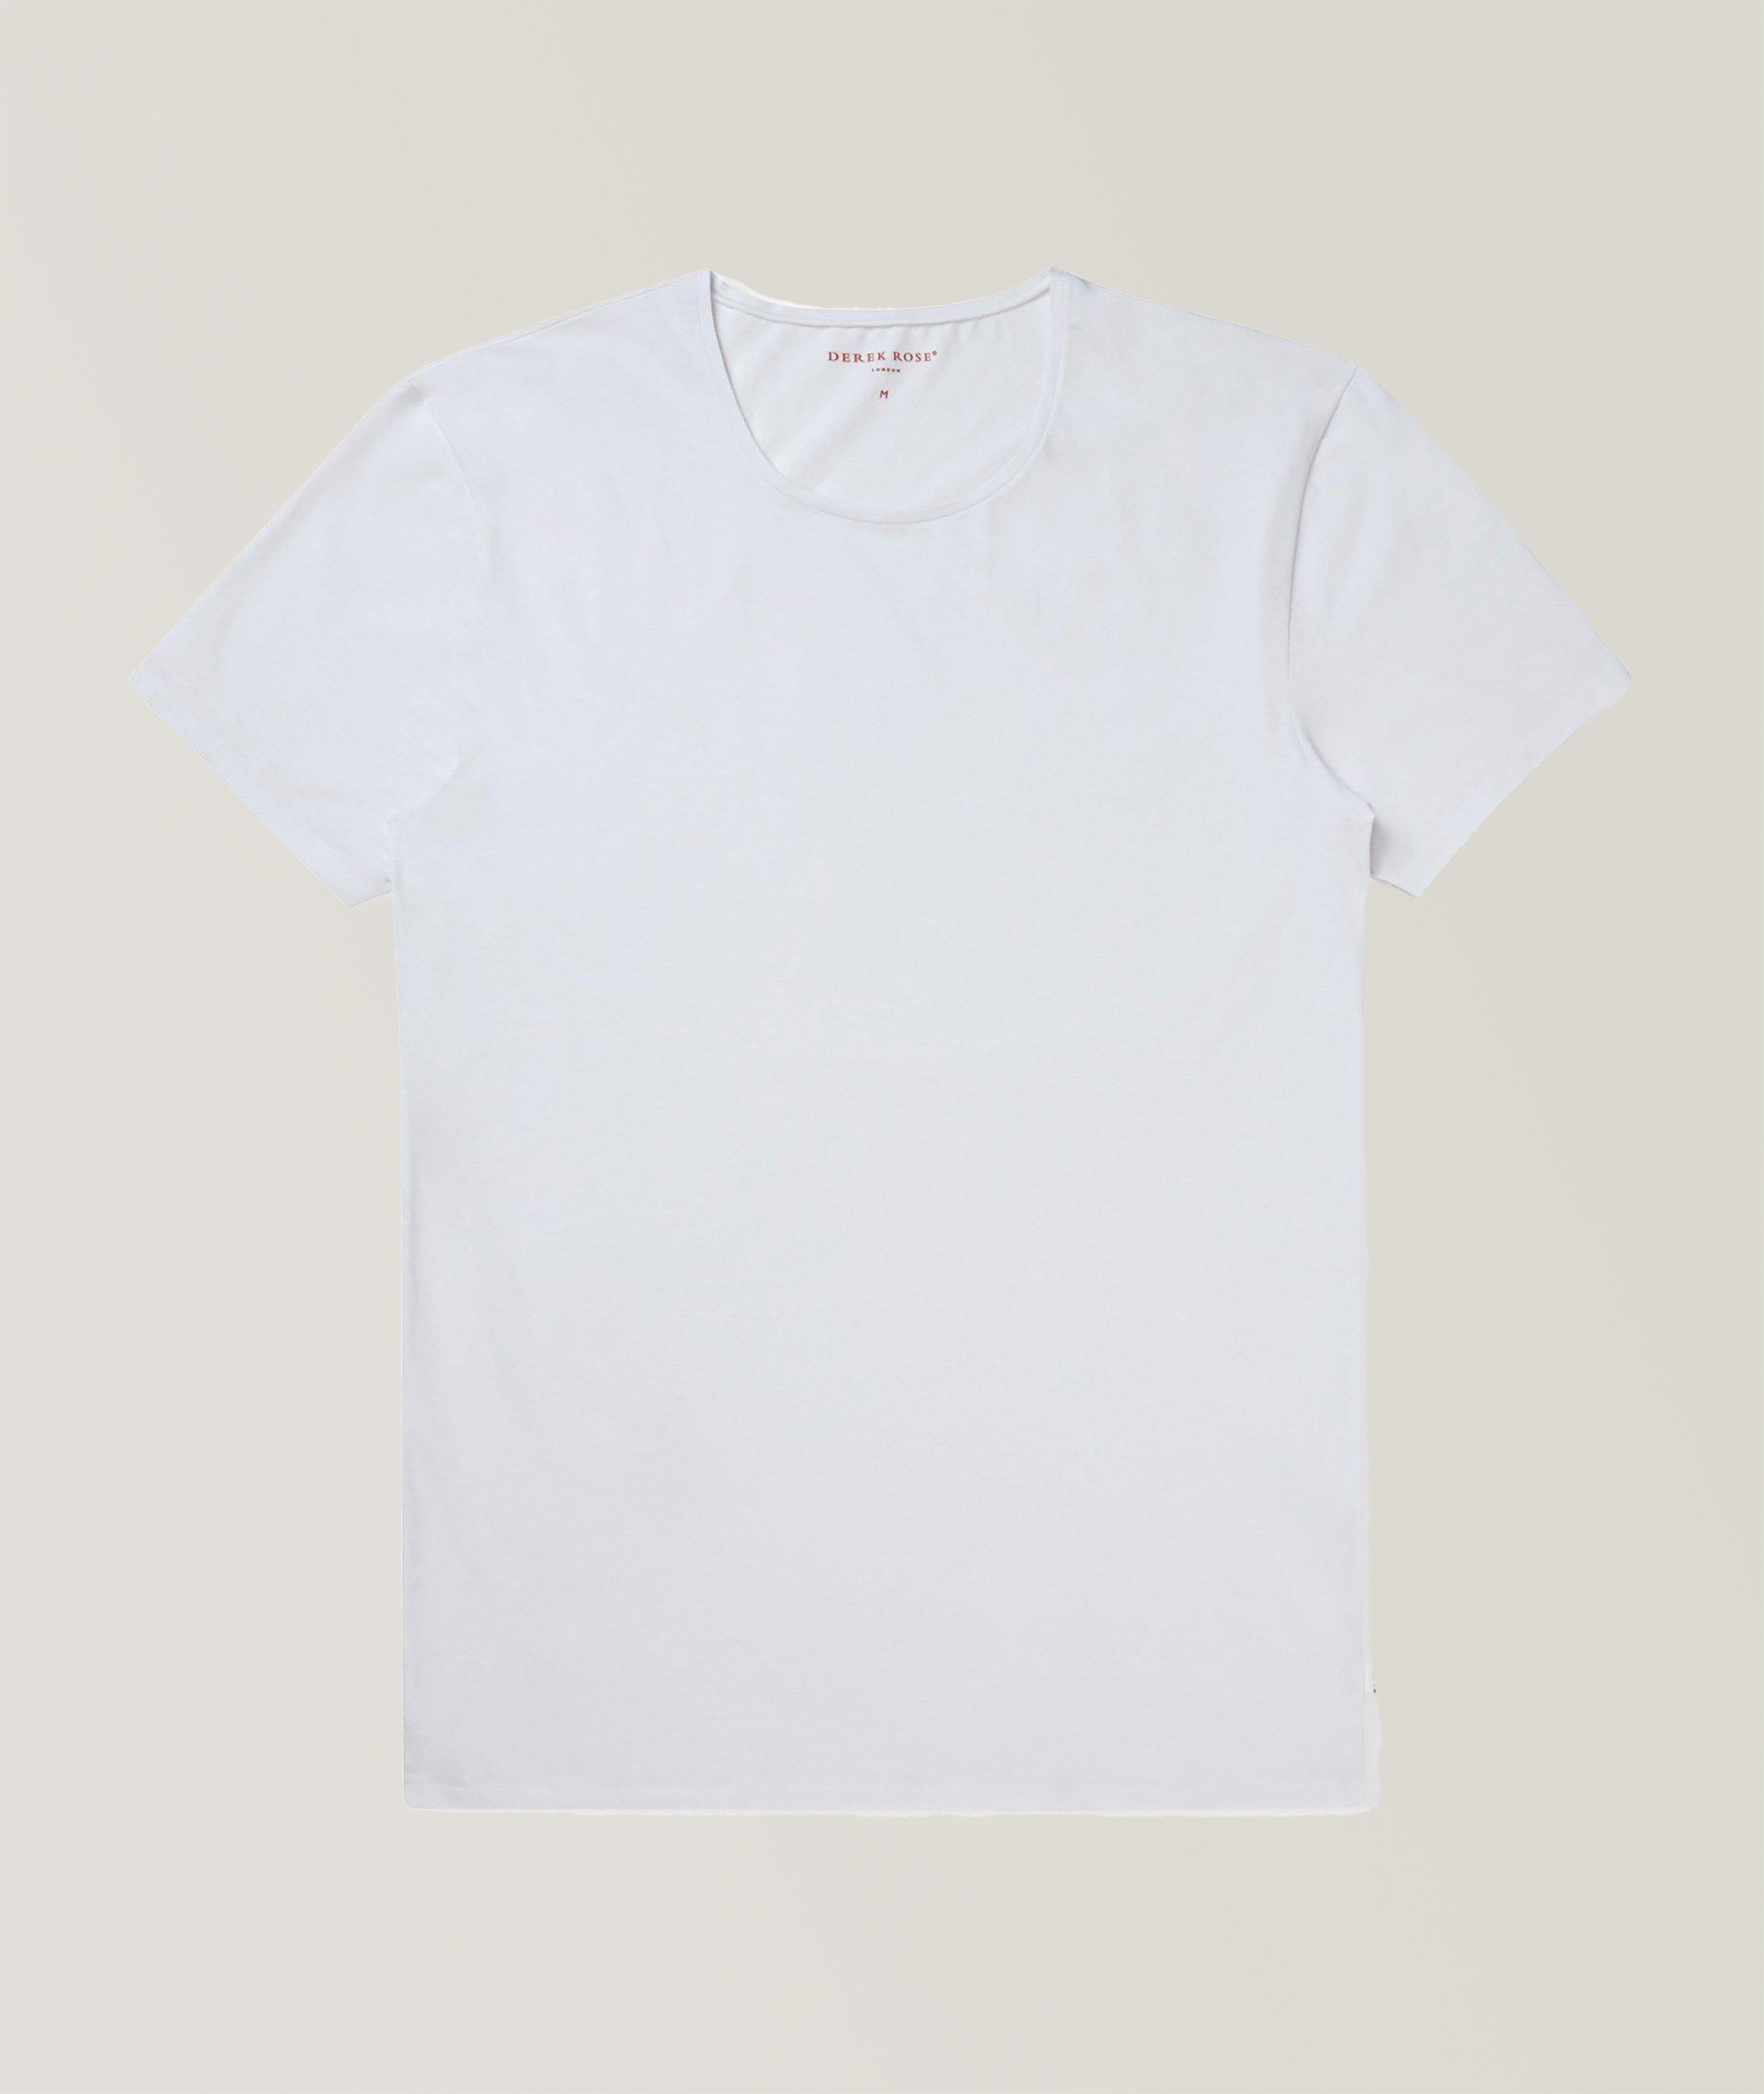 Jack Stretch Cotton T-Shirt image 0